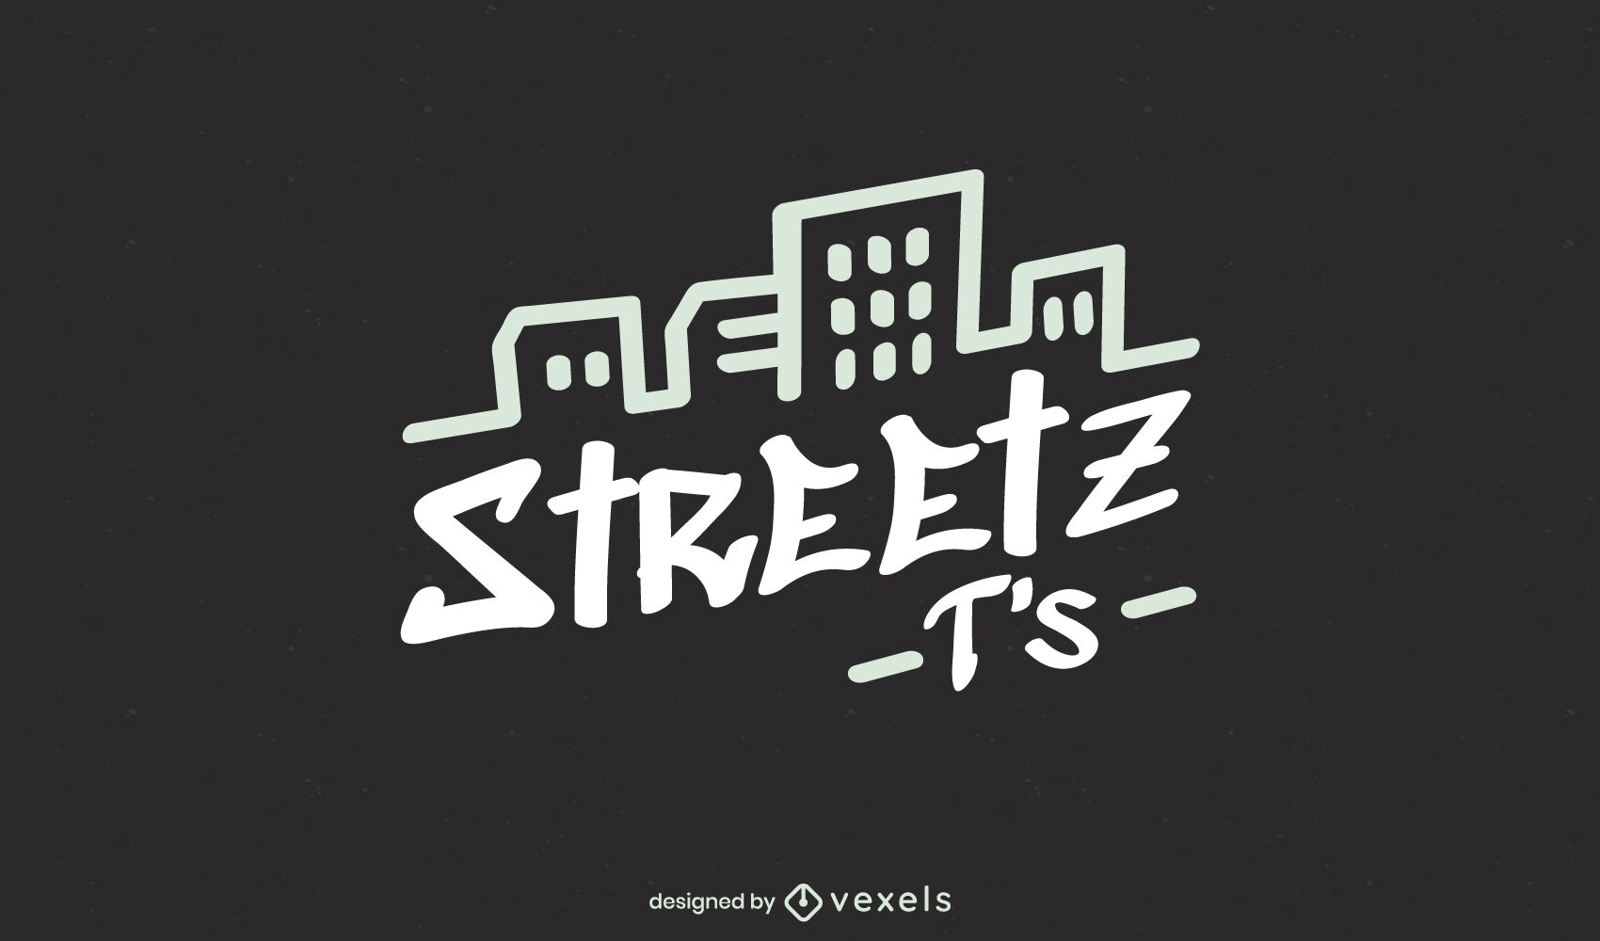 Great street logo design